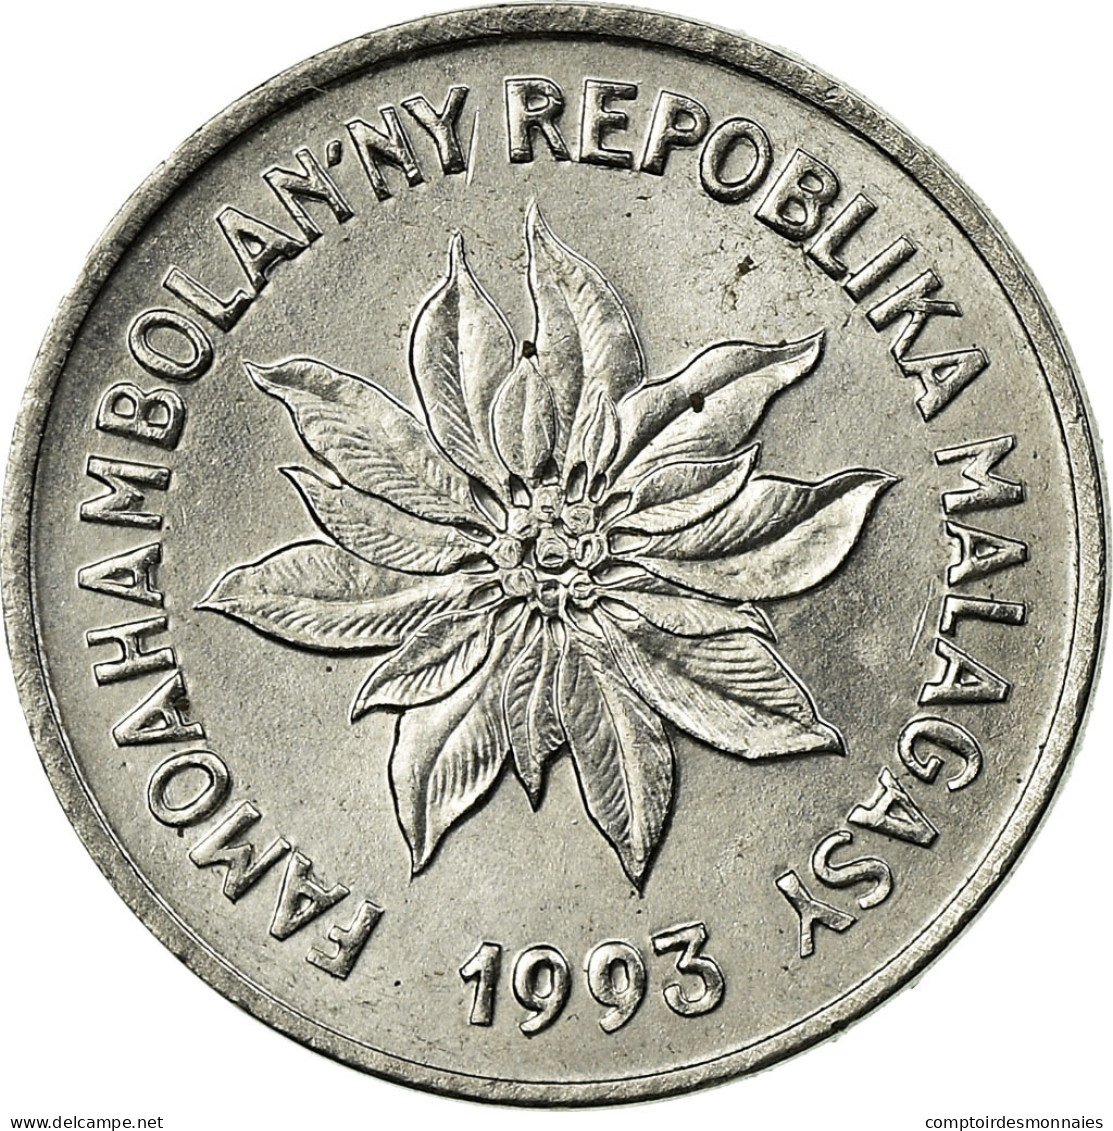 Monnaie, Madagascar, Franc, 1993, Paris, SUP, Stainless Steel, KM:8 - Madagascar